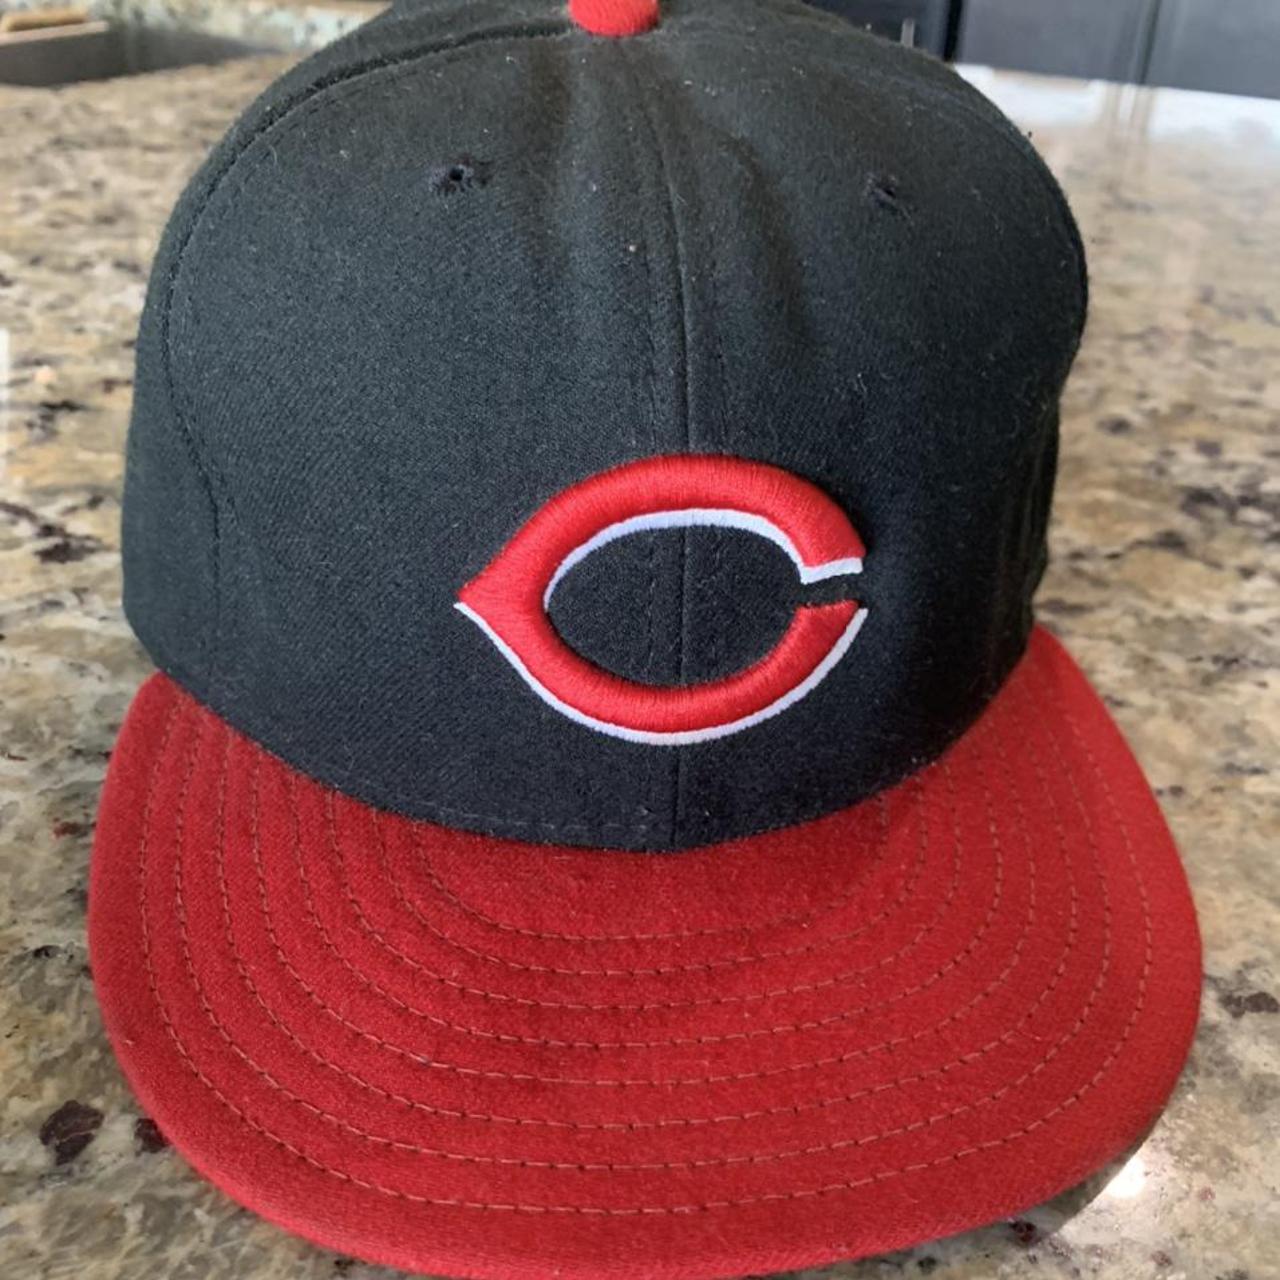 Size 7 1/2 fitted hat. MLB team Cincinnati Reds.